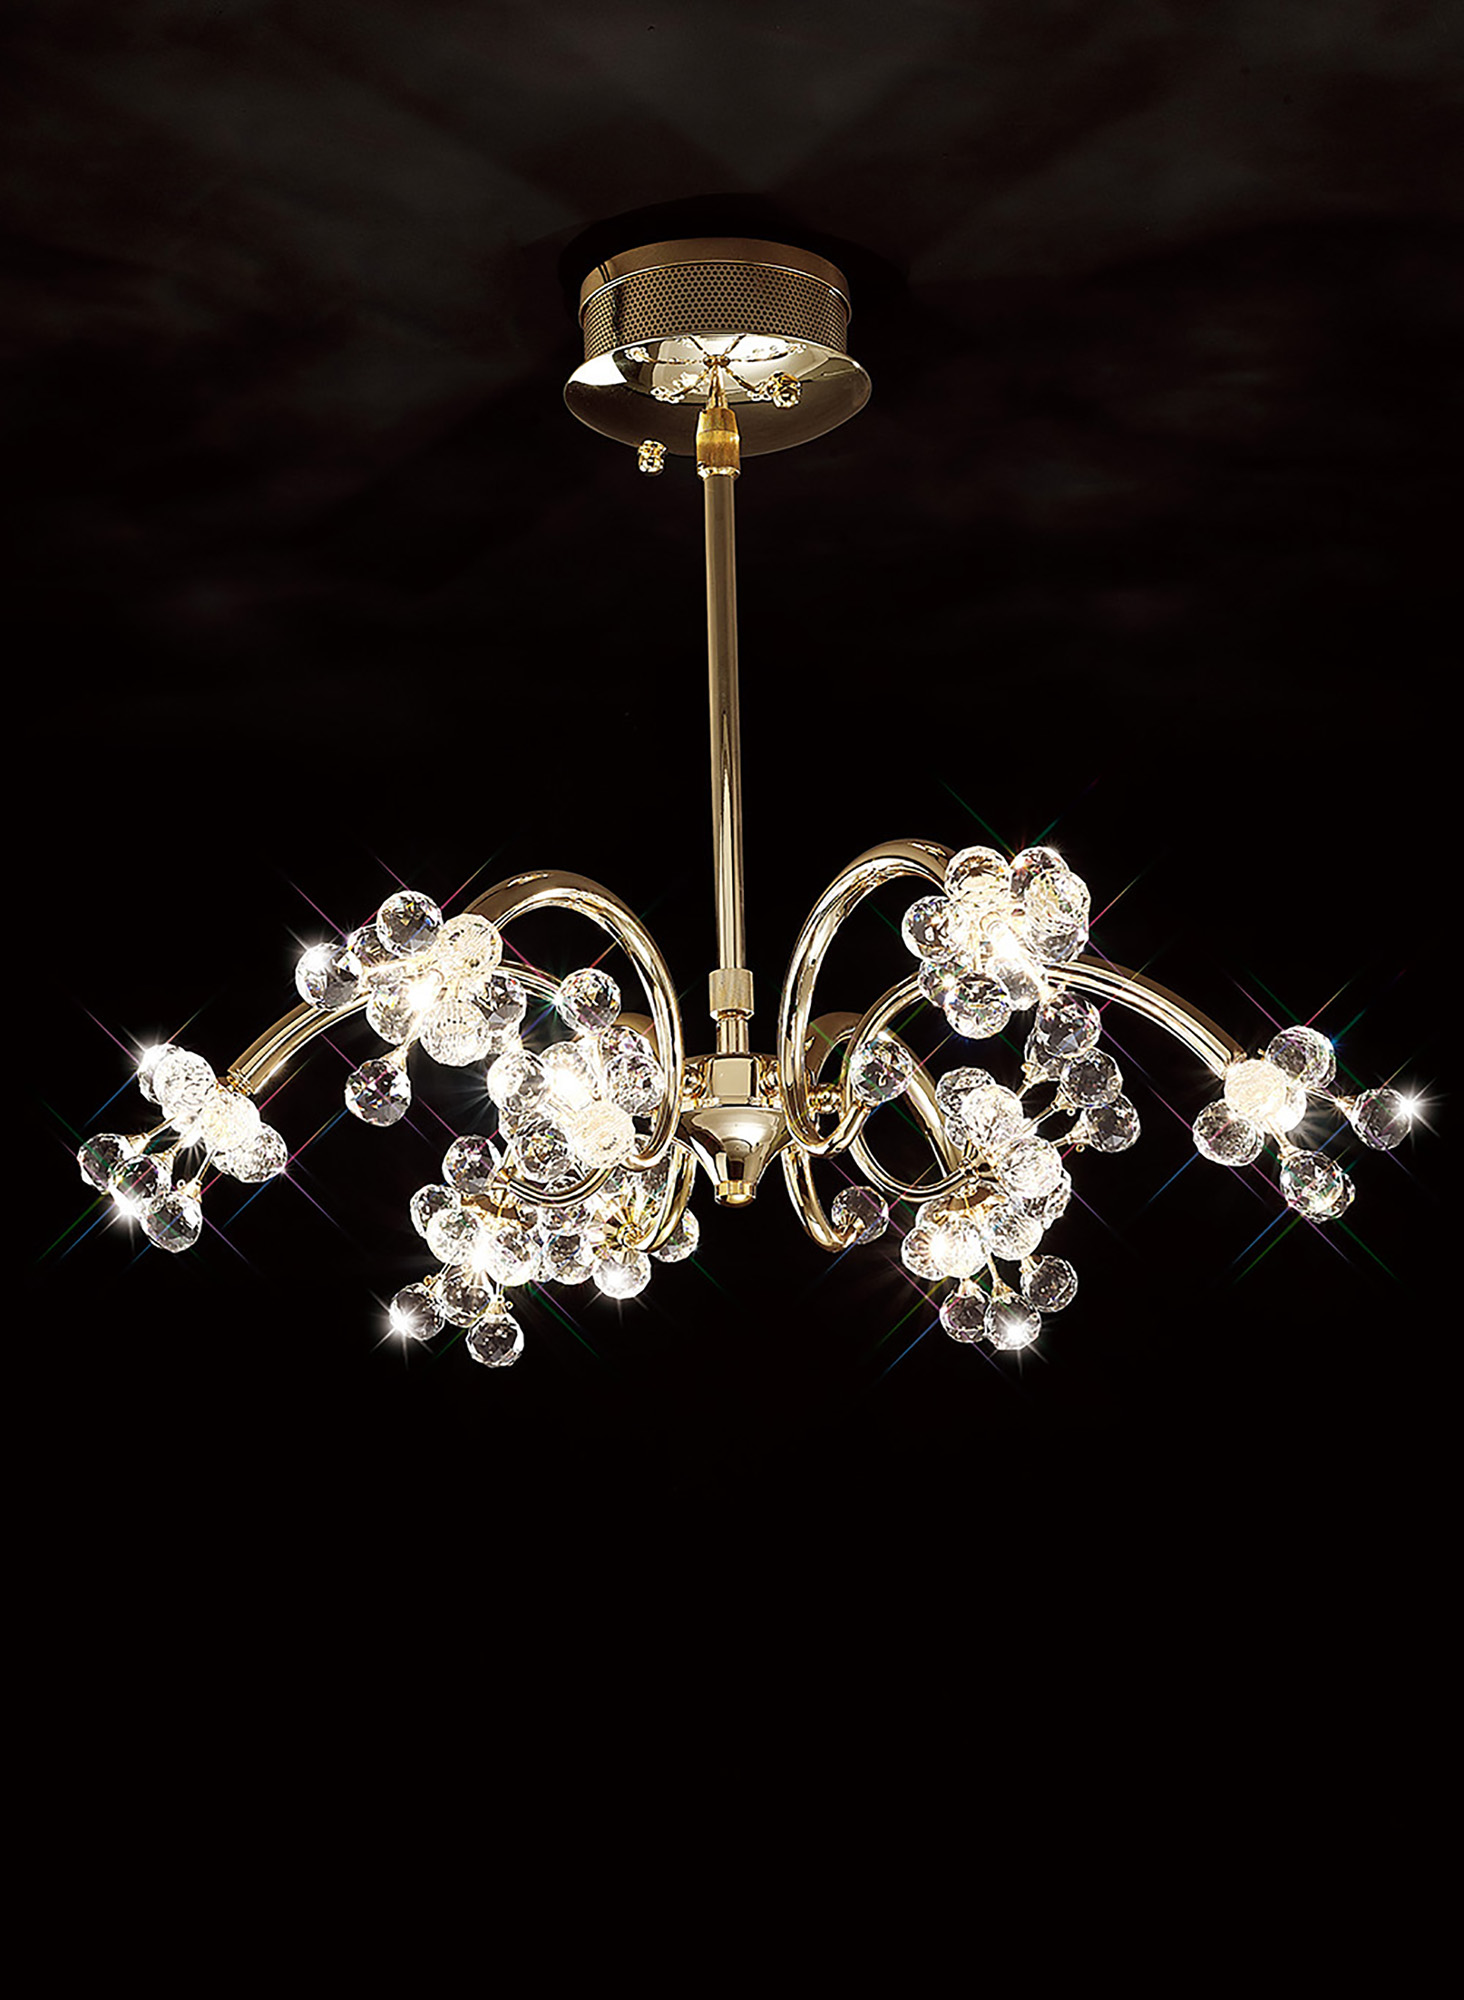 Octavia French Gold Crystal Ceiling Lights Diyas Multi Arm Crystal Fittings